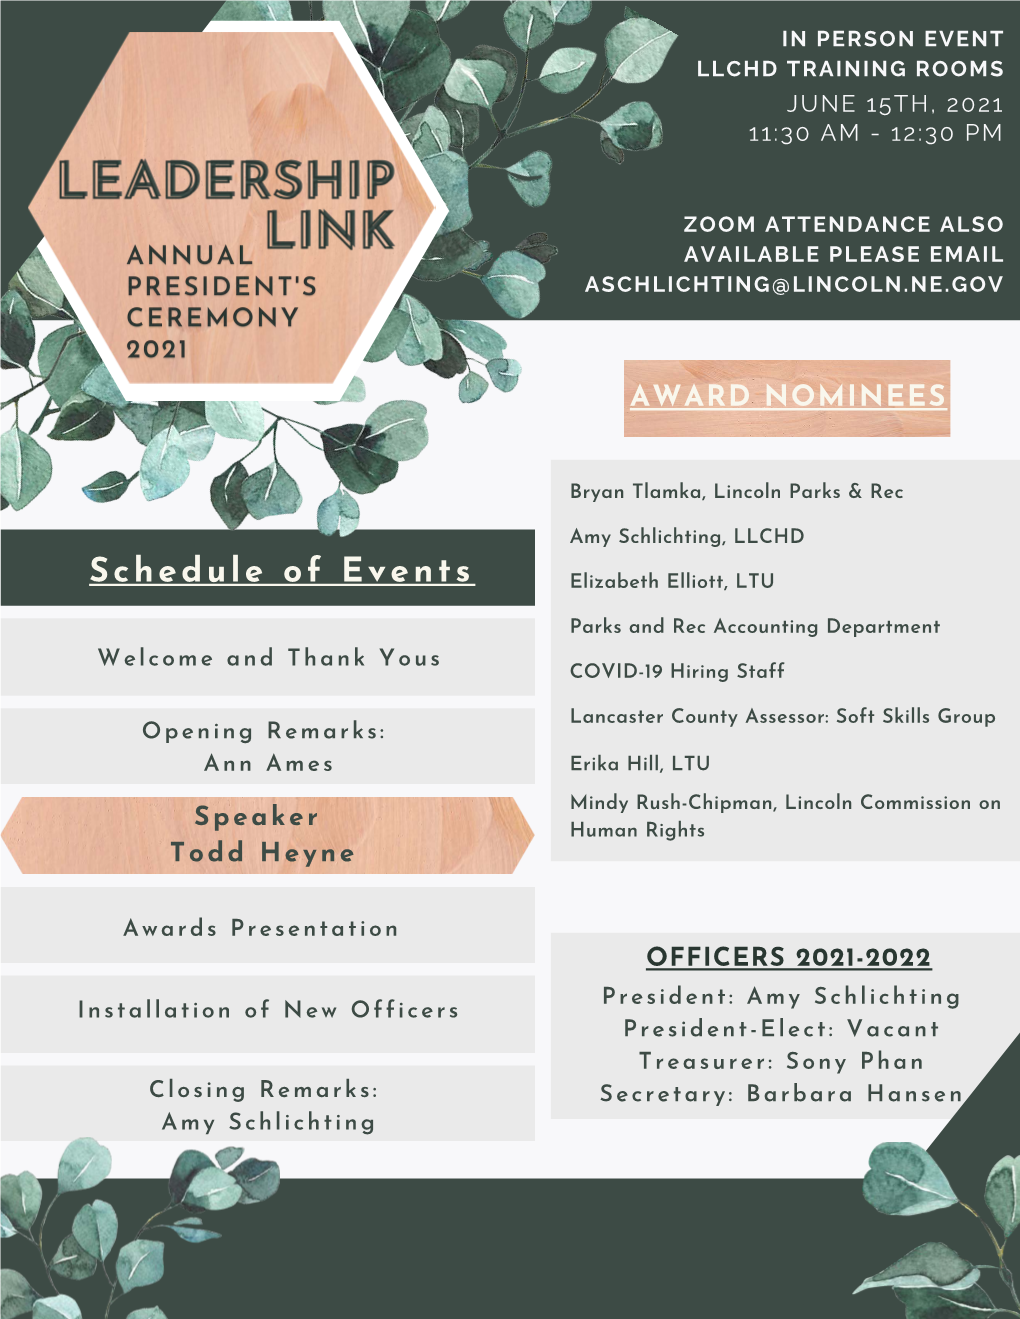 Leadership Link Program Annual Luncheon 2021